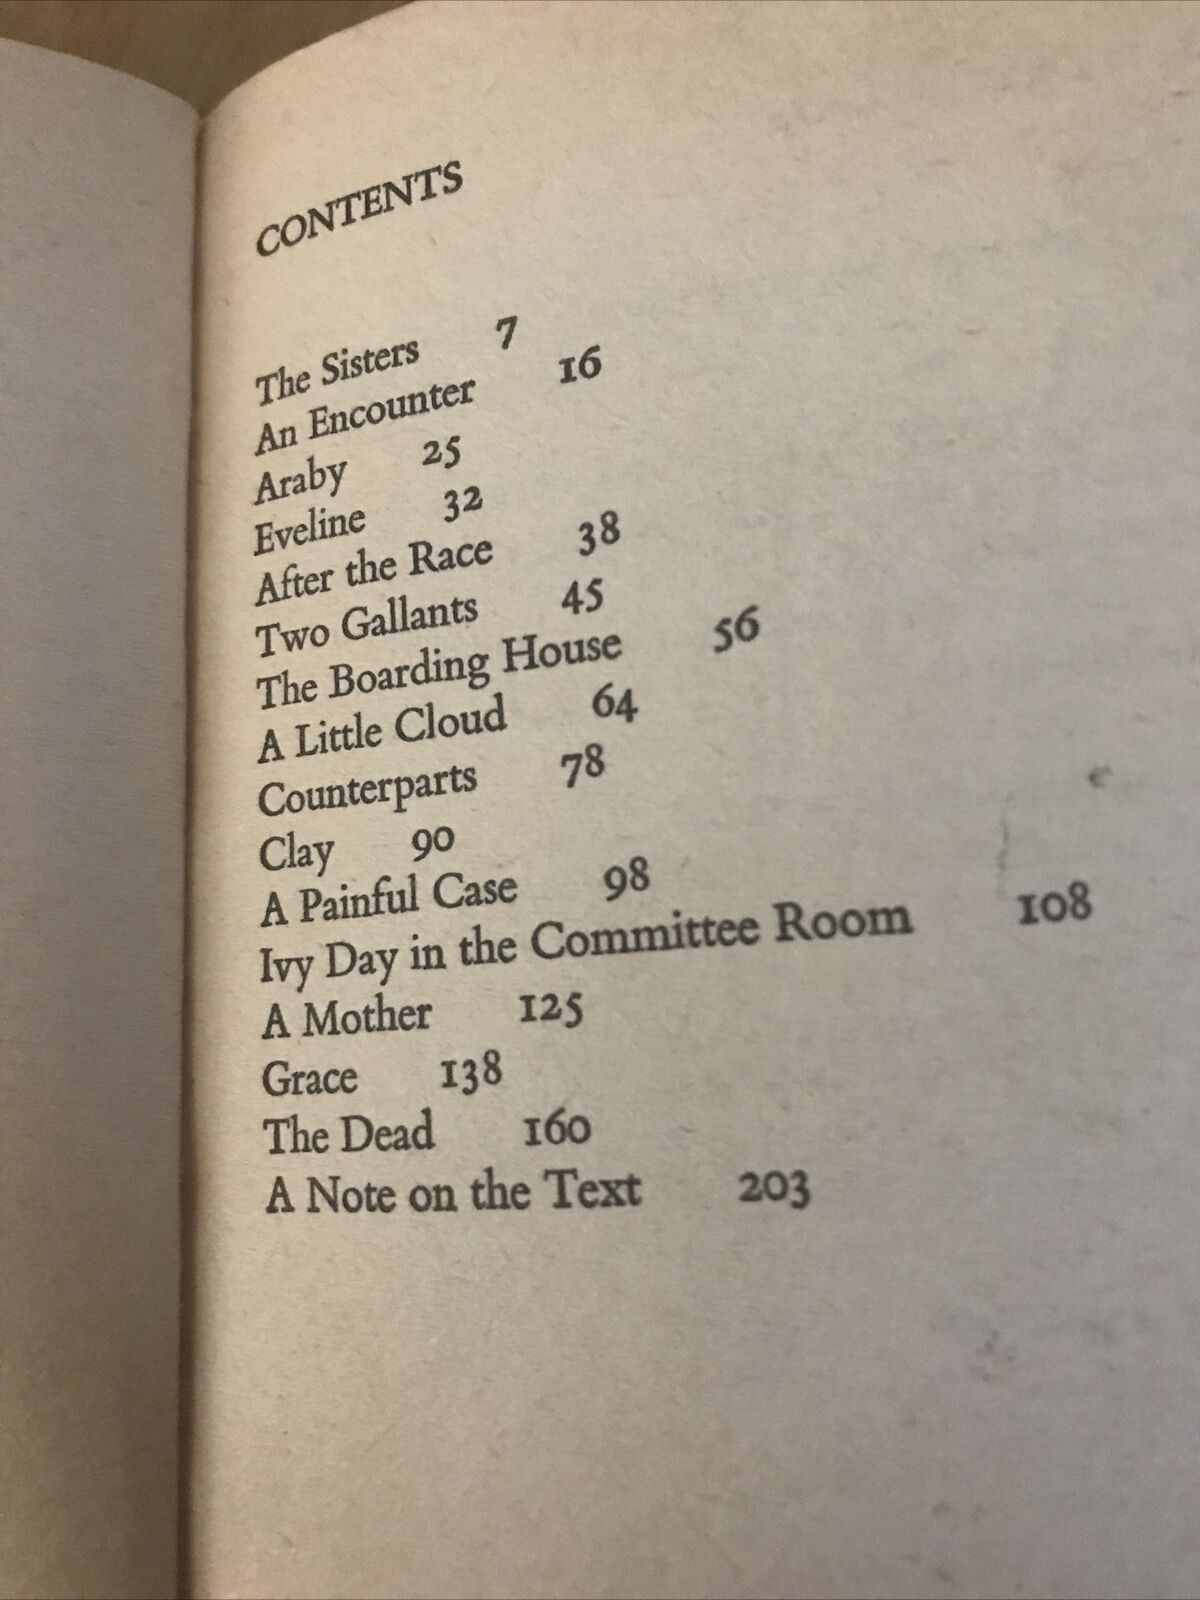 1979 Dubliners - James Joyce (Panther Books)